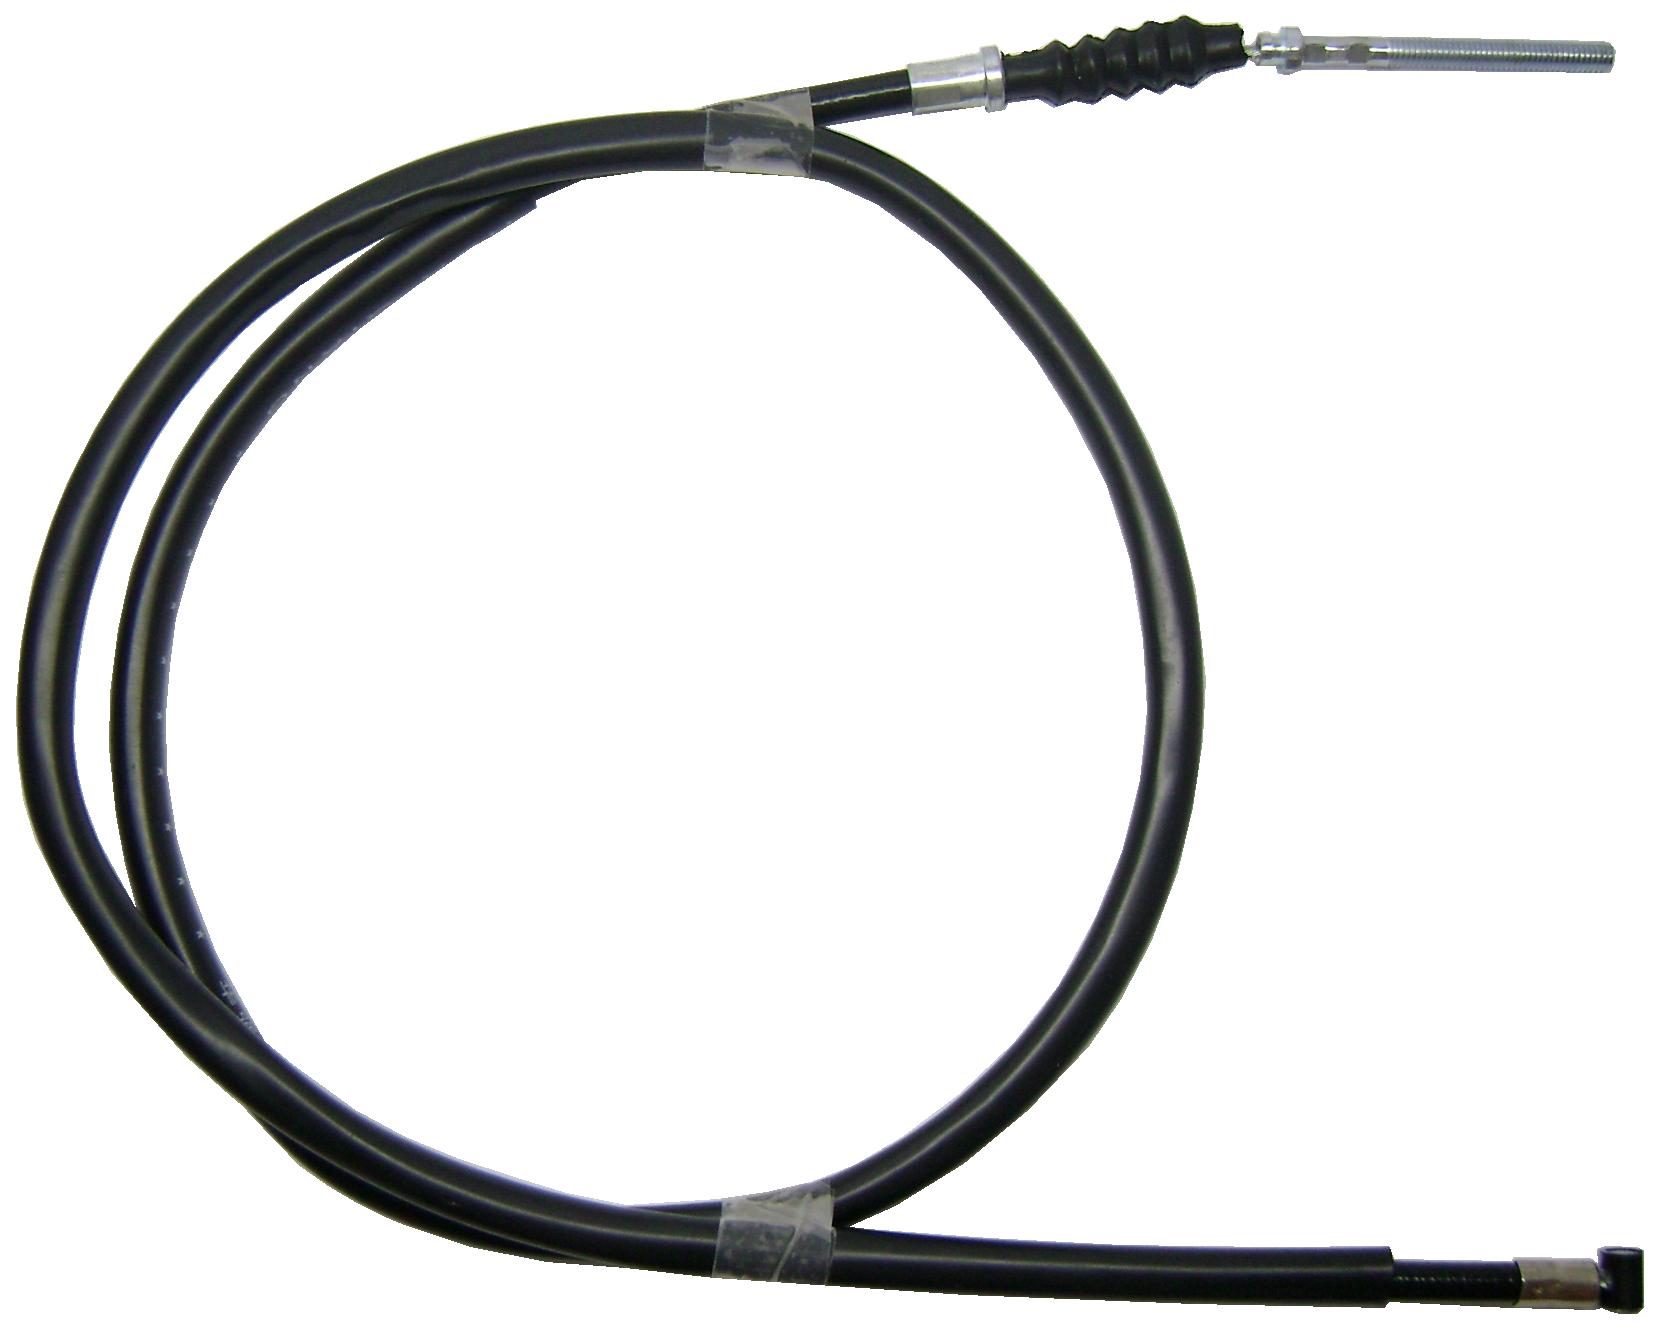 Cable Freno CG125